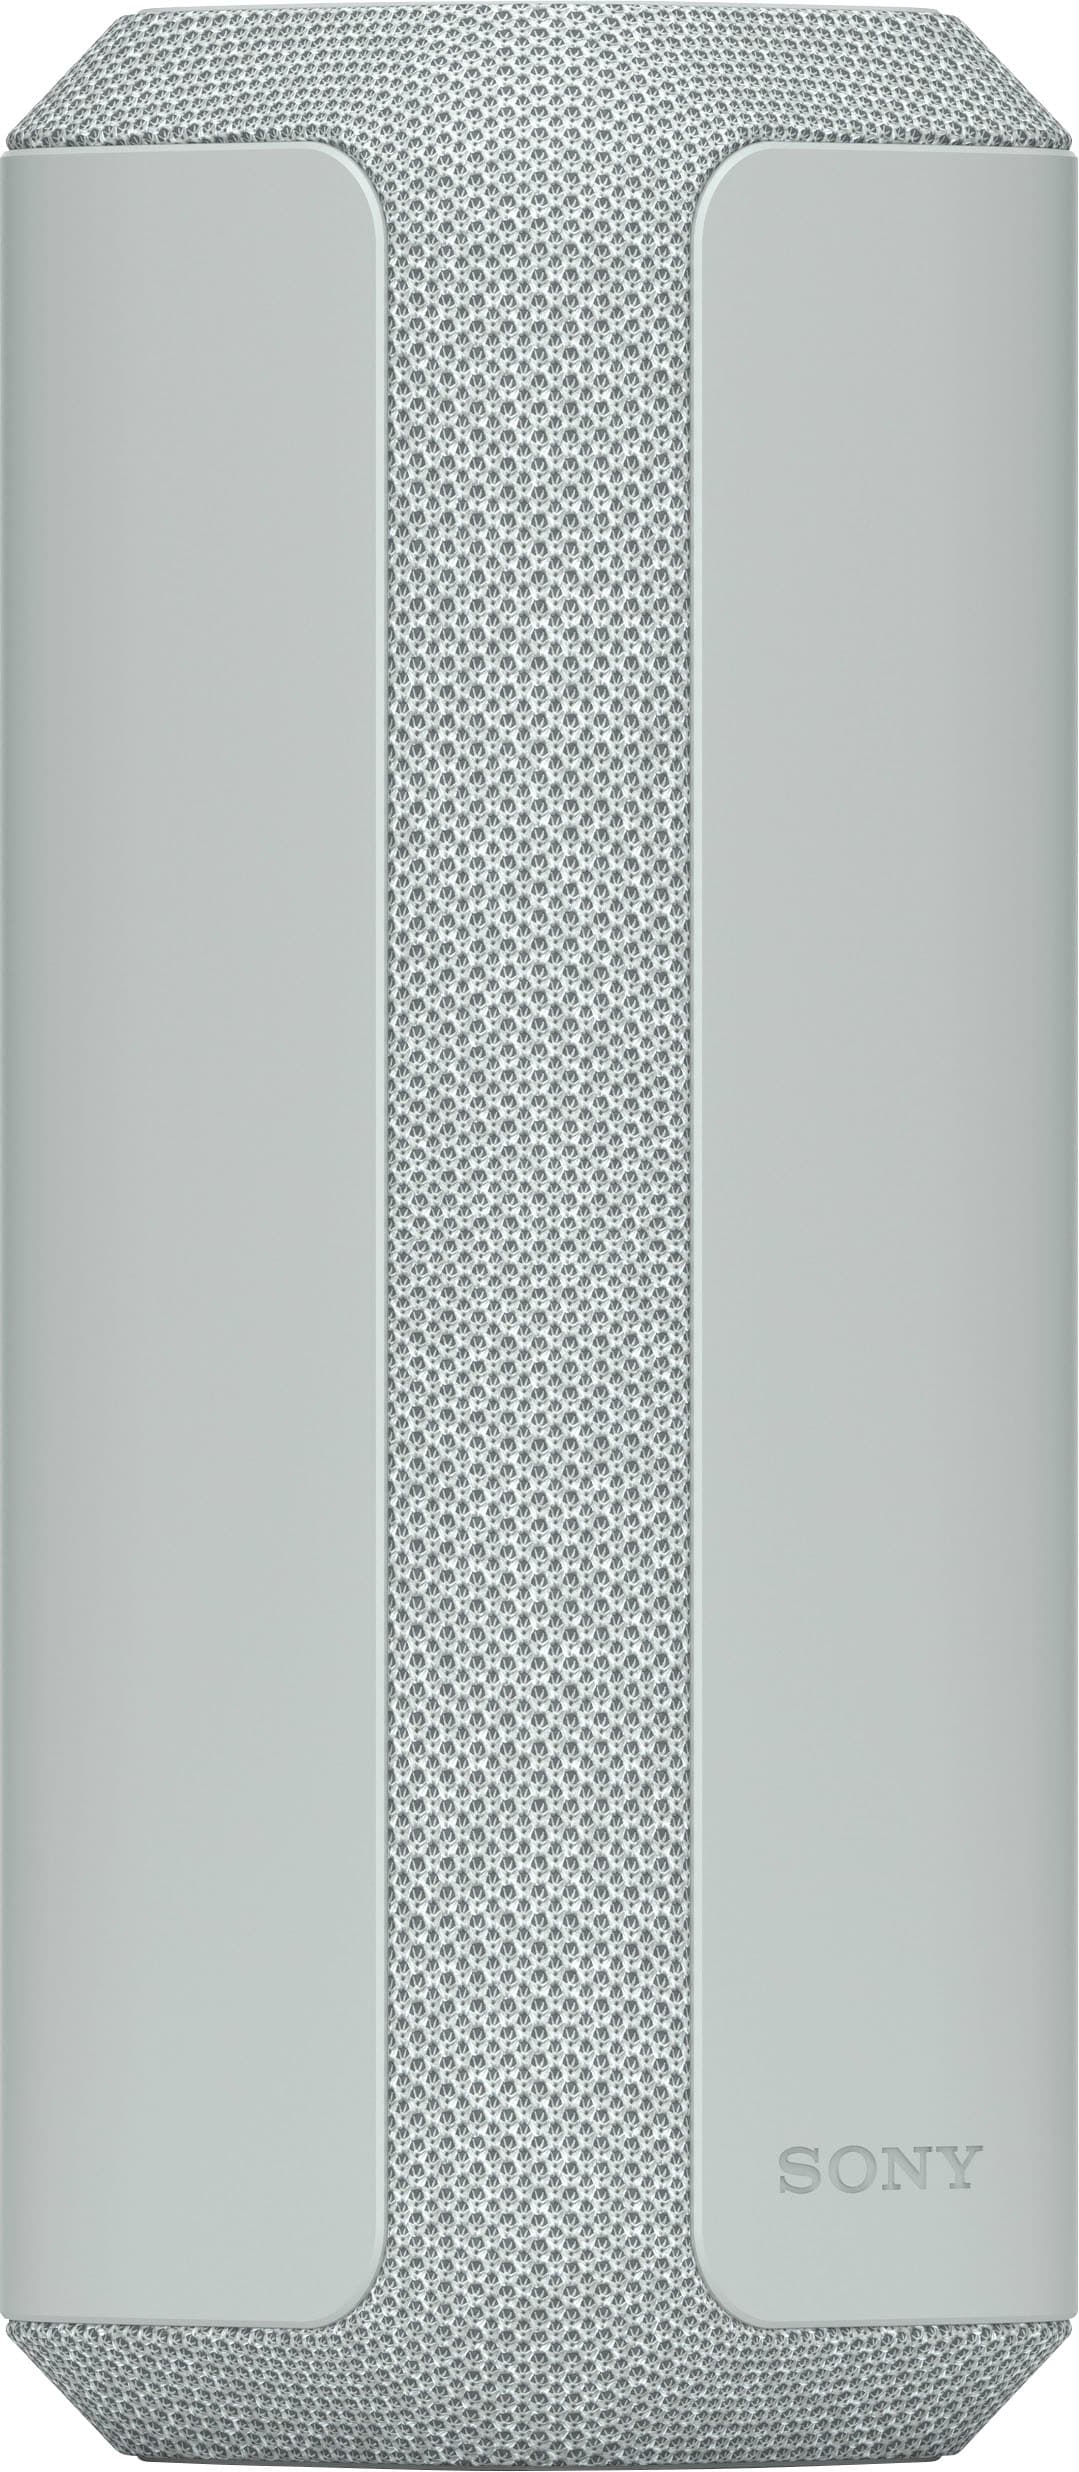 Sony - XE300 Portable X-Series Bluetooth Speaker - Light Gray_0